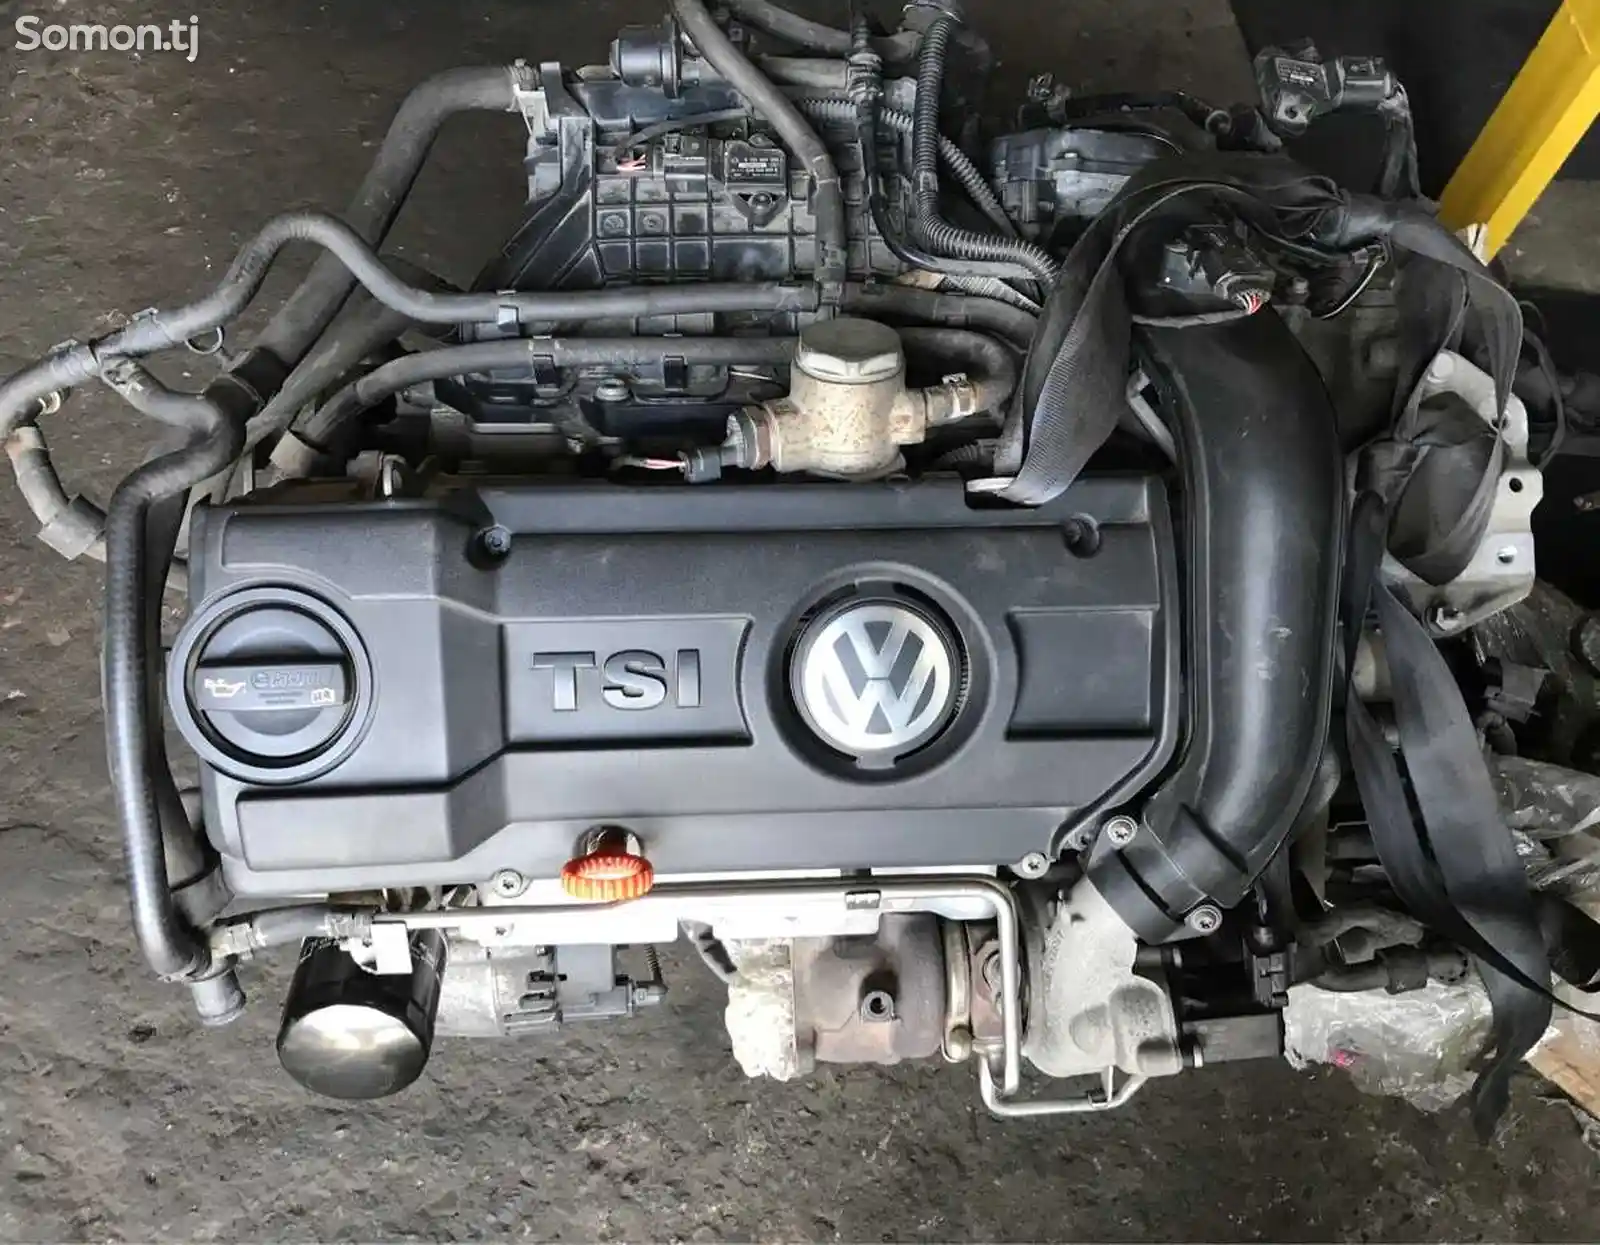 Двигатель от Volkswagen, TSI - 1.4, turbo, 2006-2016г-1